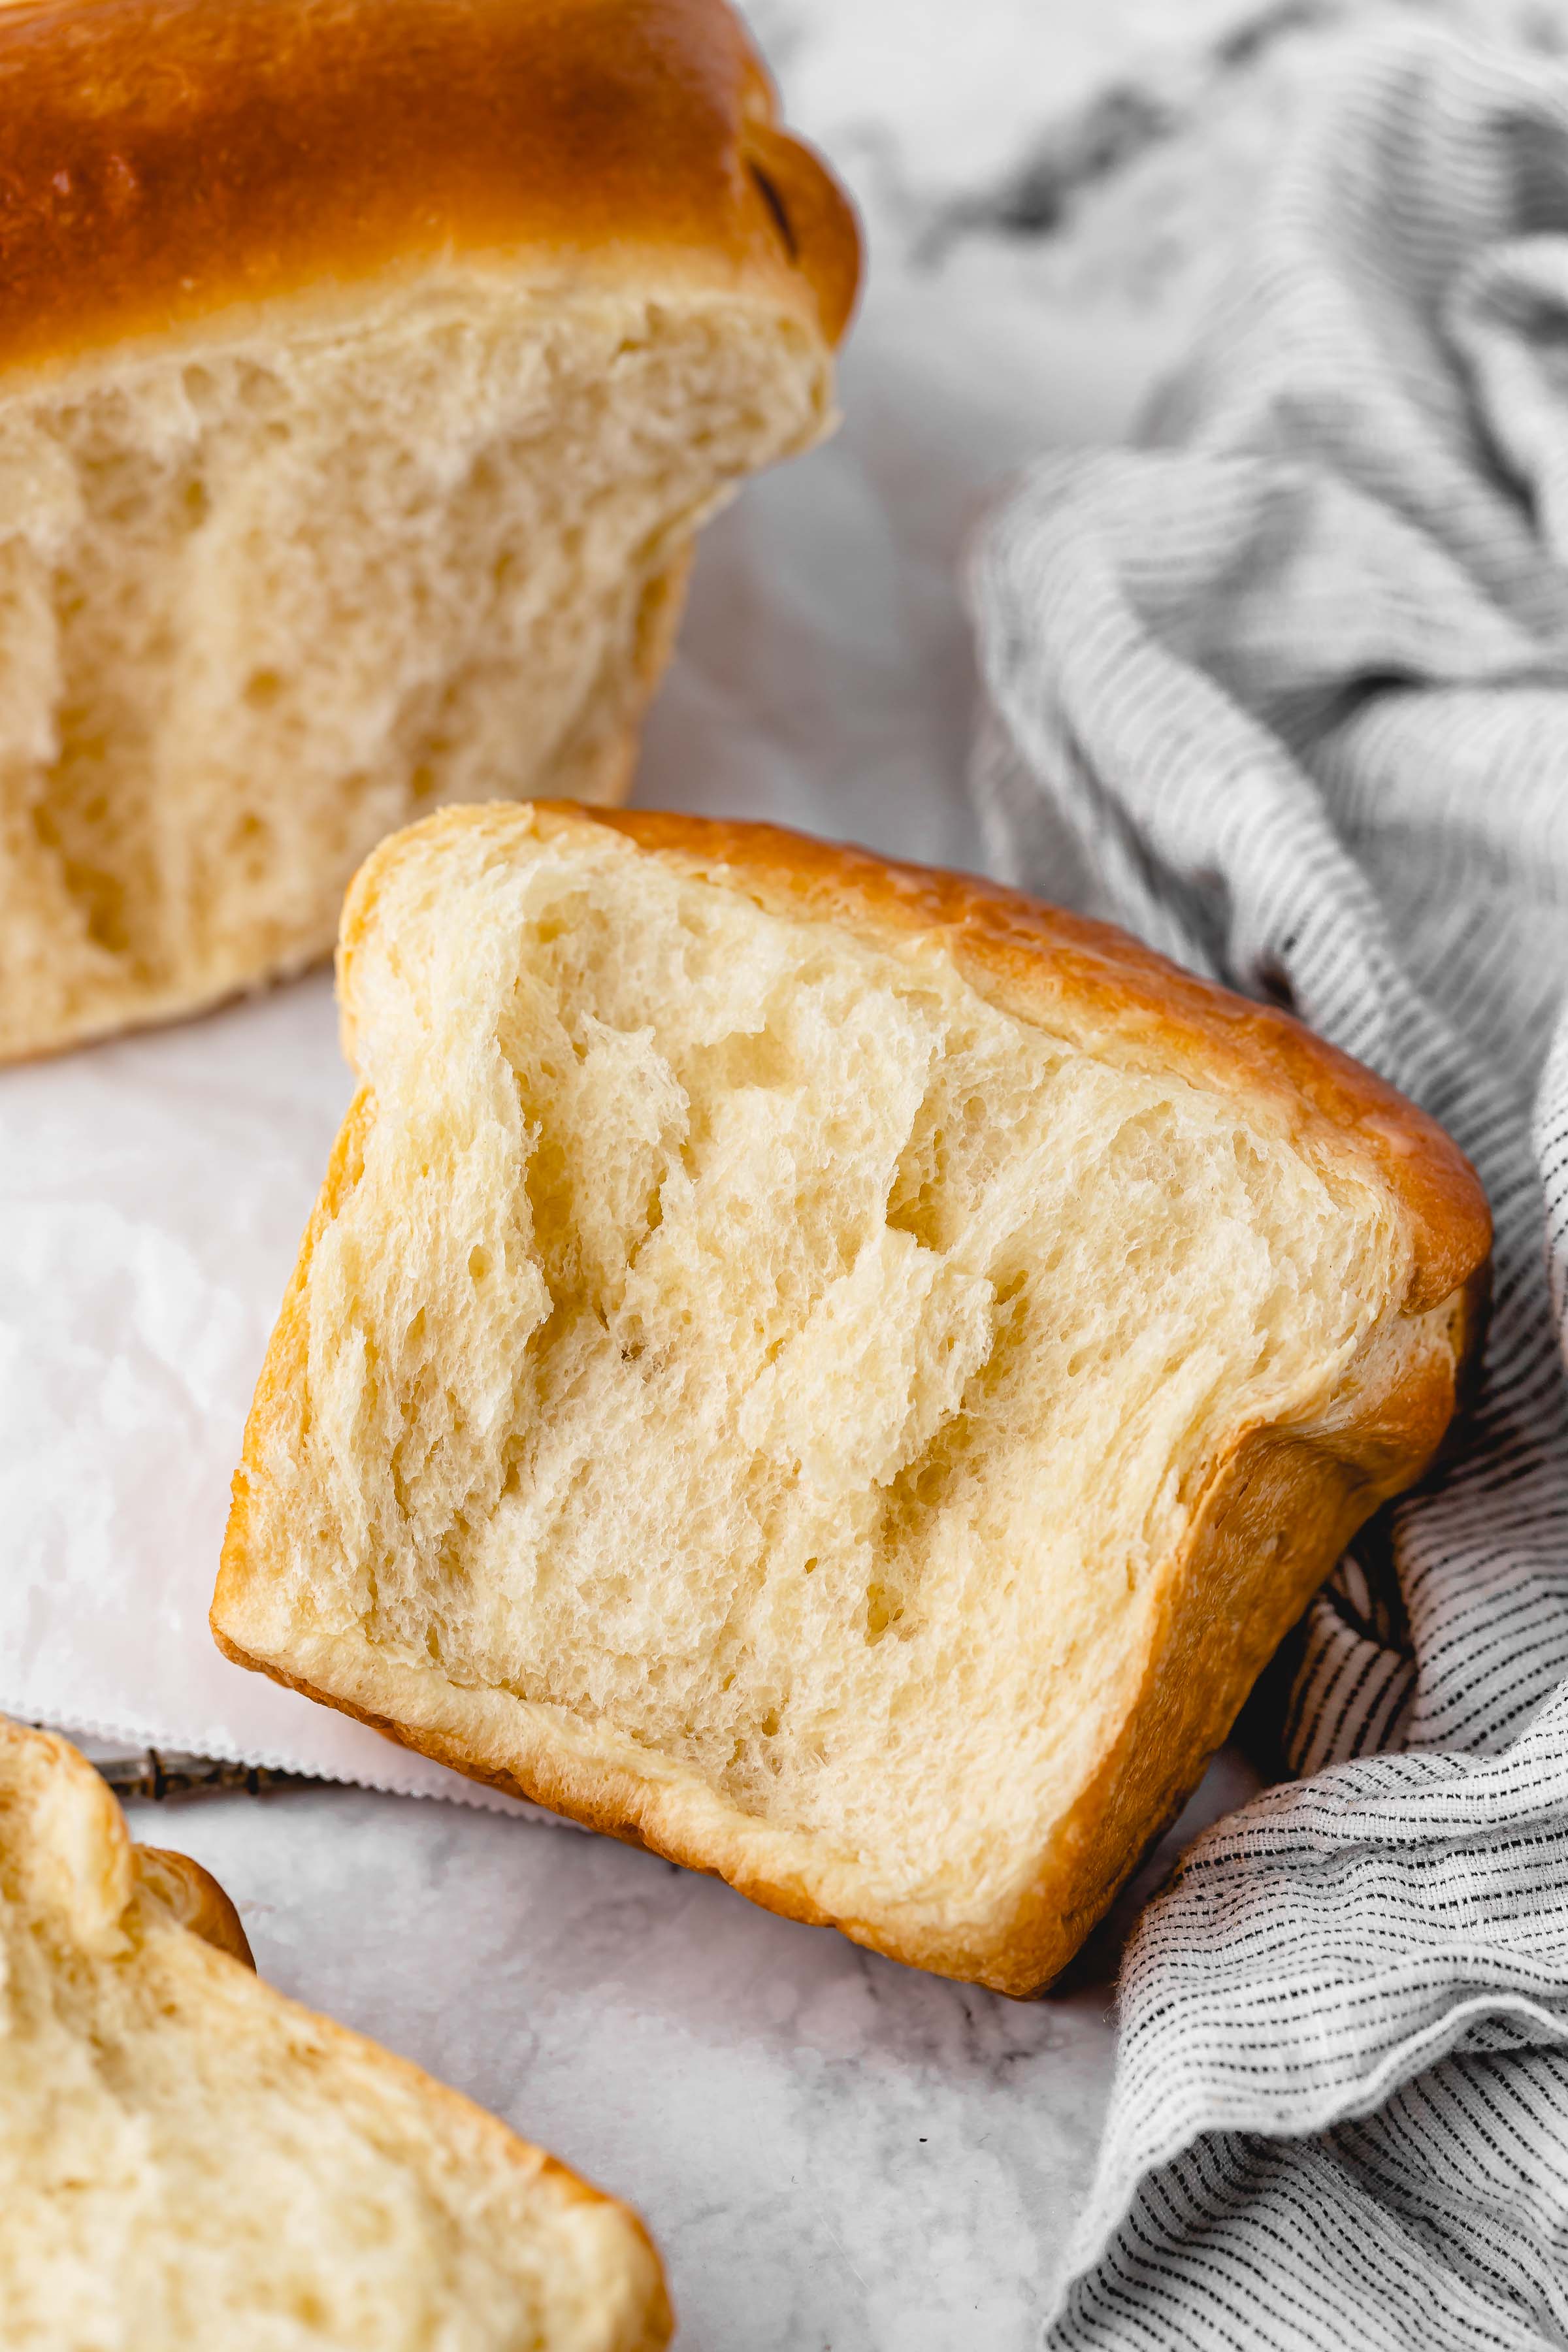 Piece of vegan milk bread, showing soft, tender texture